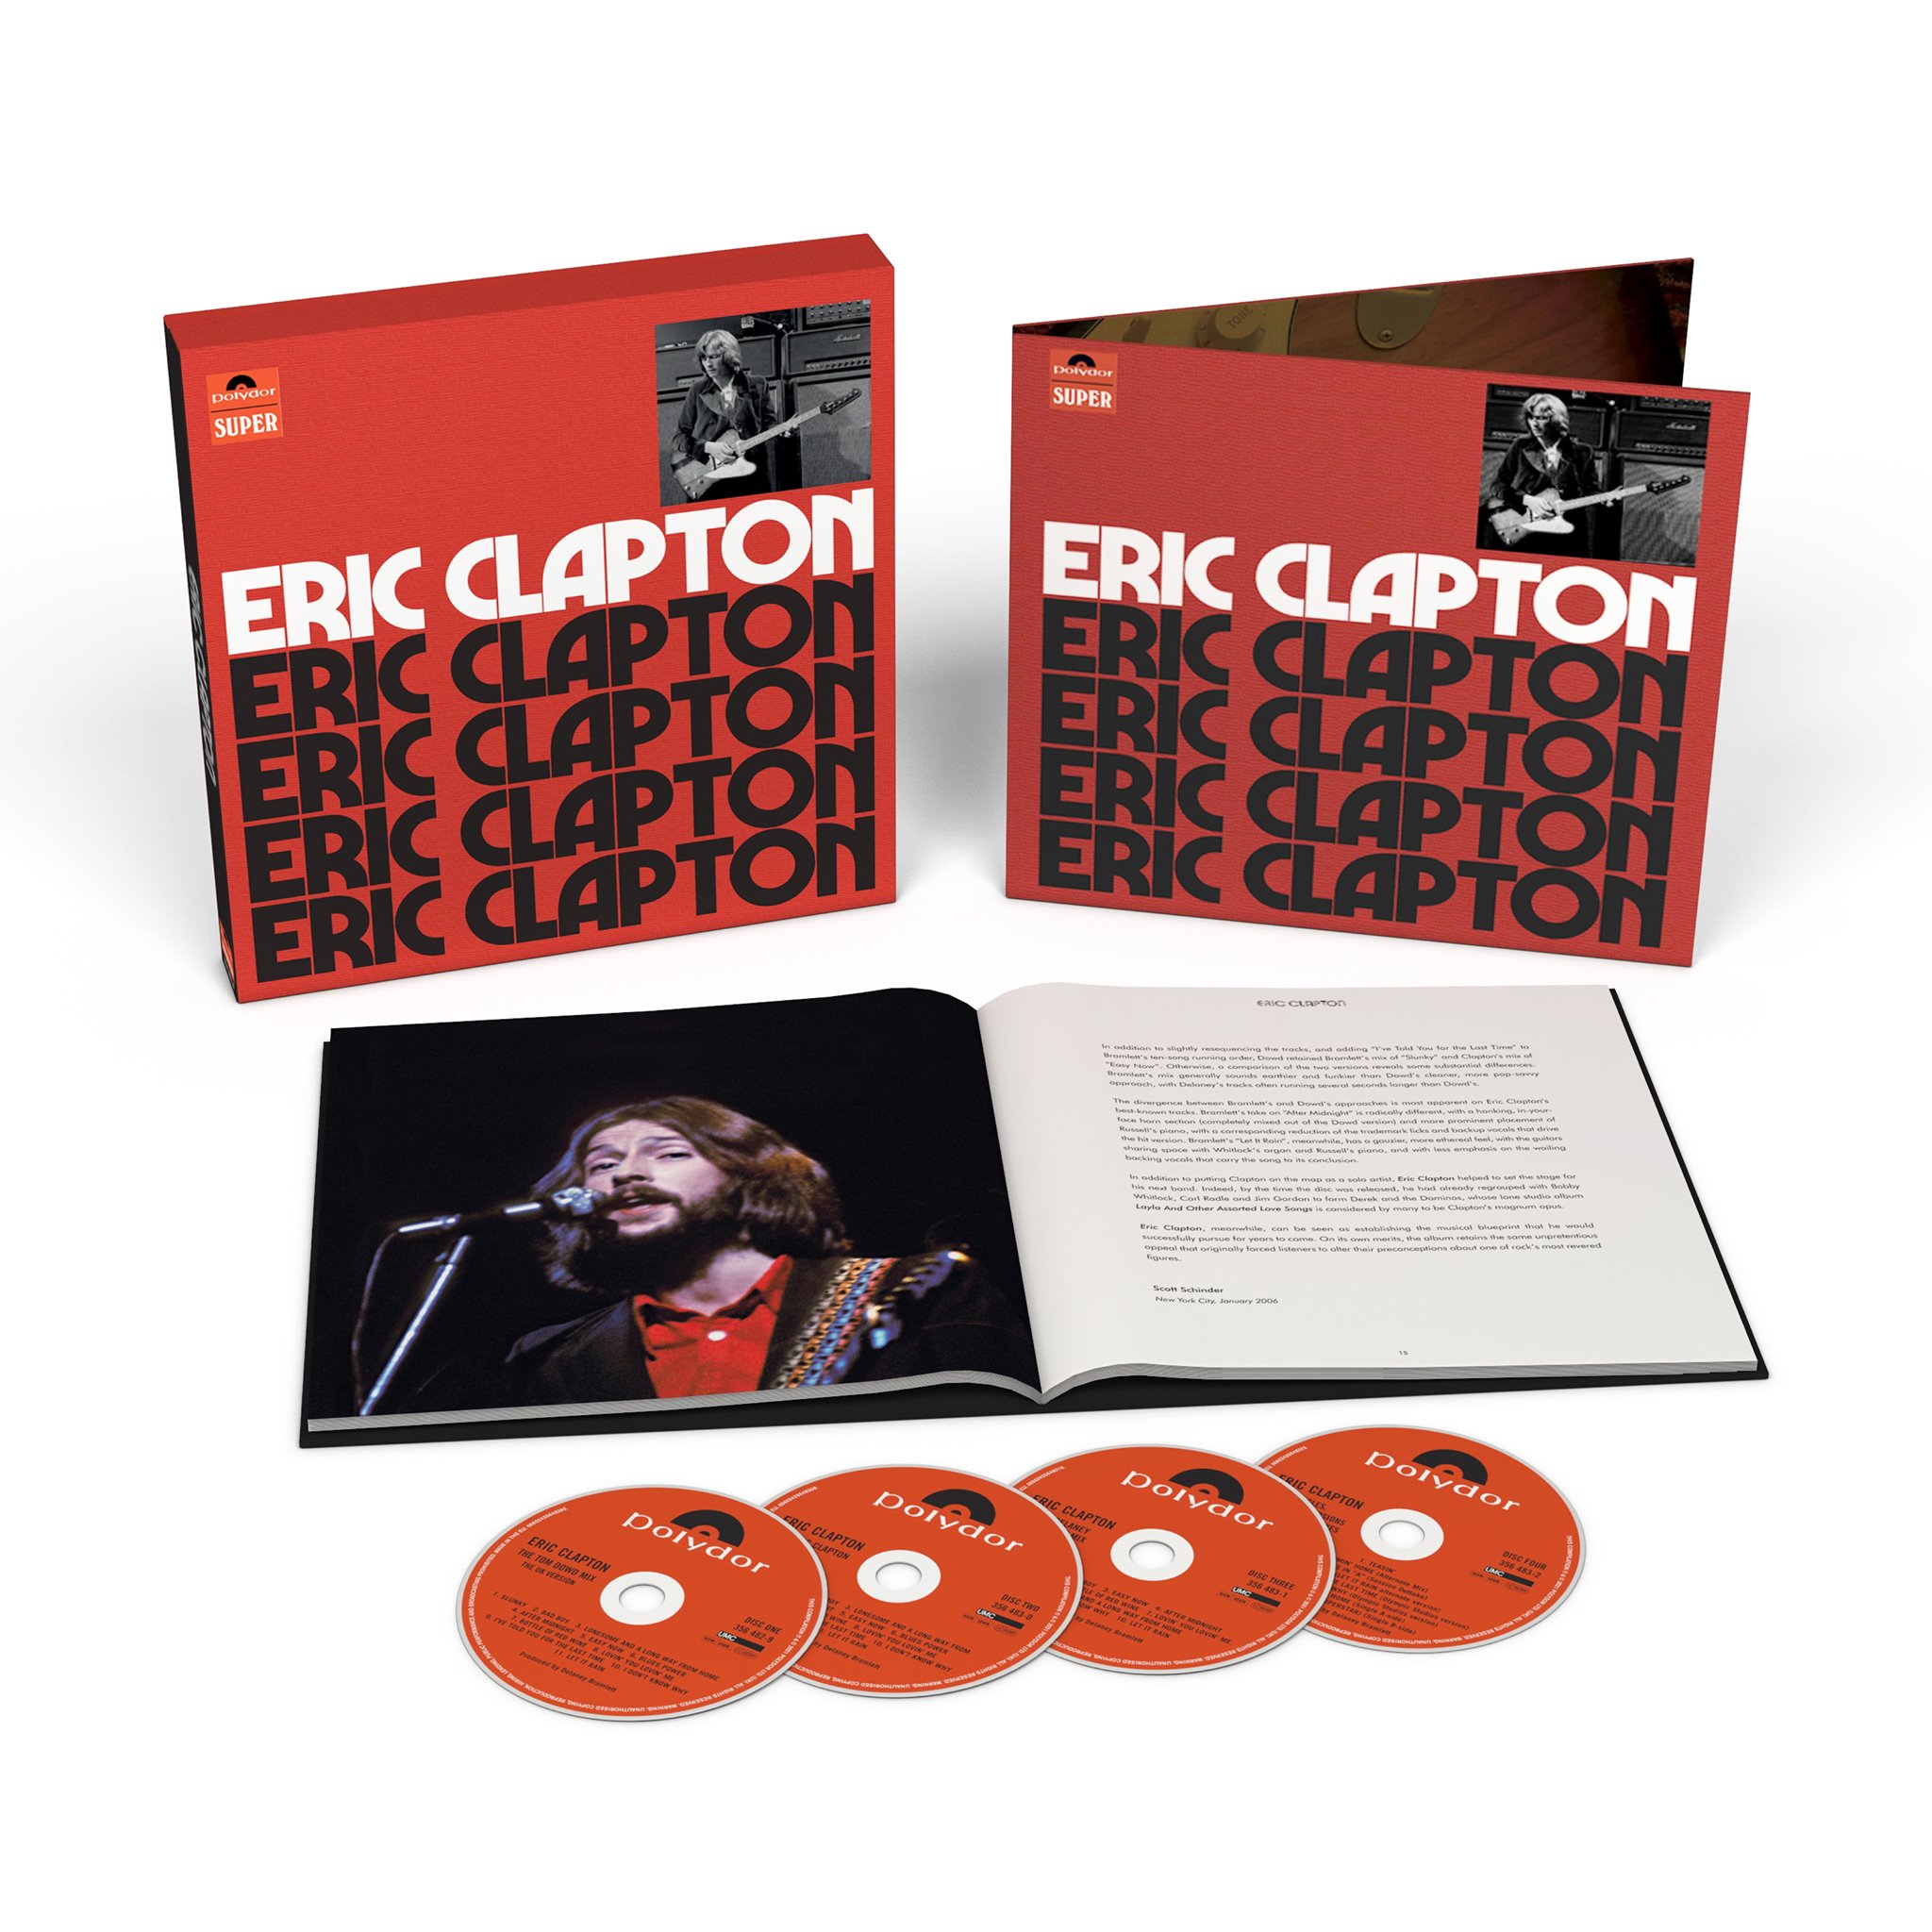 Eric Clapton Debut Deluxe